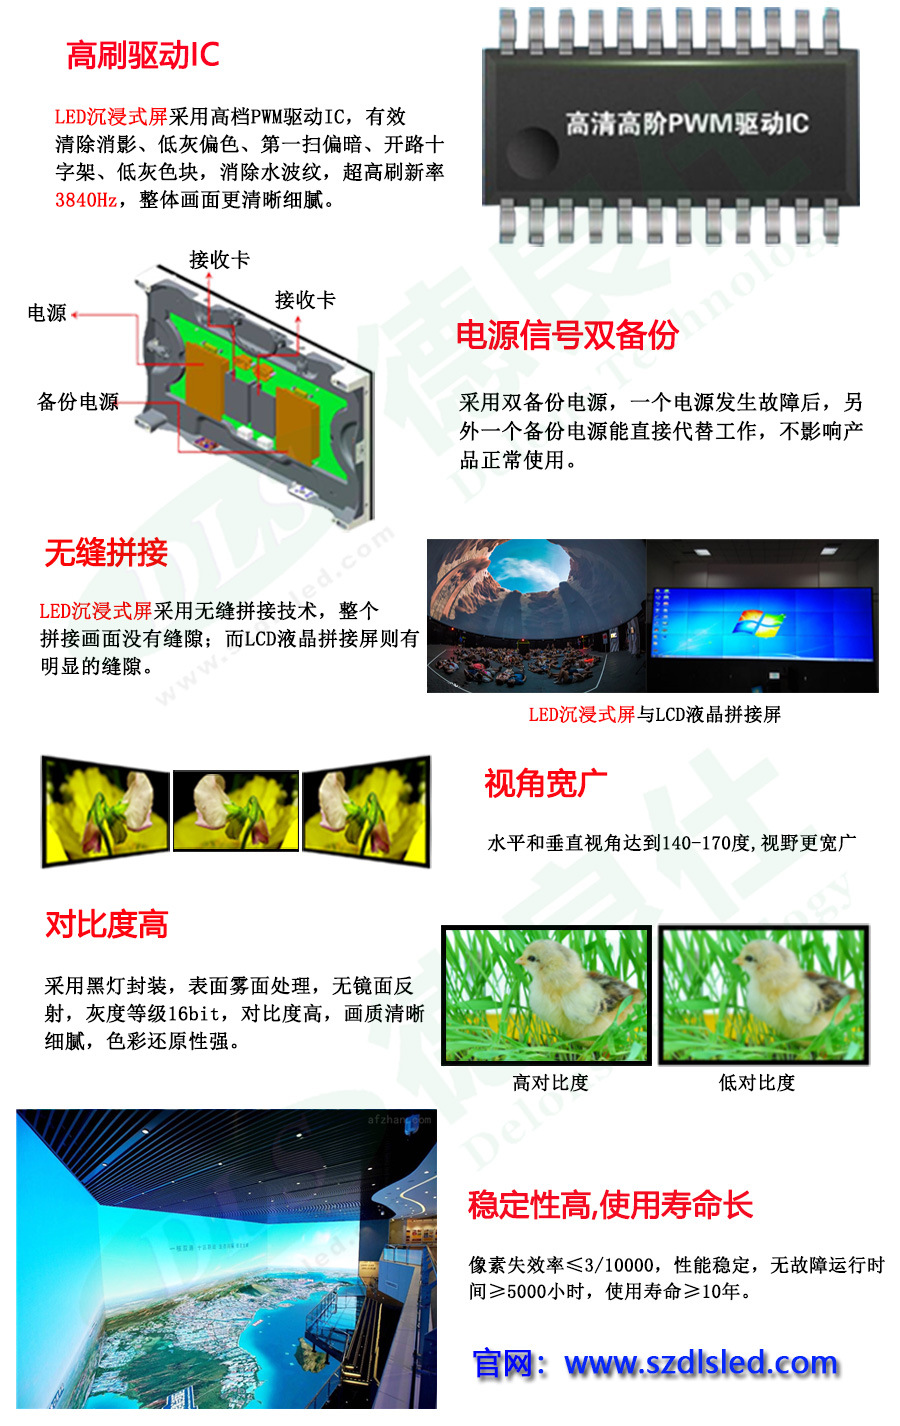 P2.5沉浸式室内超震撼模拟真实高清全彩LED显示屏(图2)